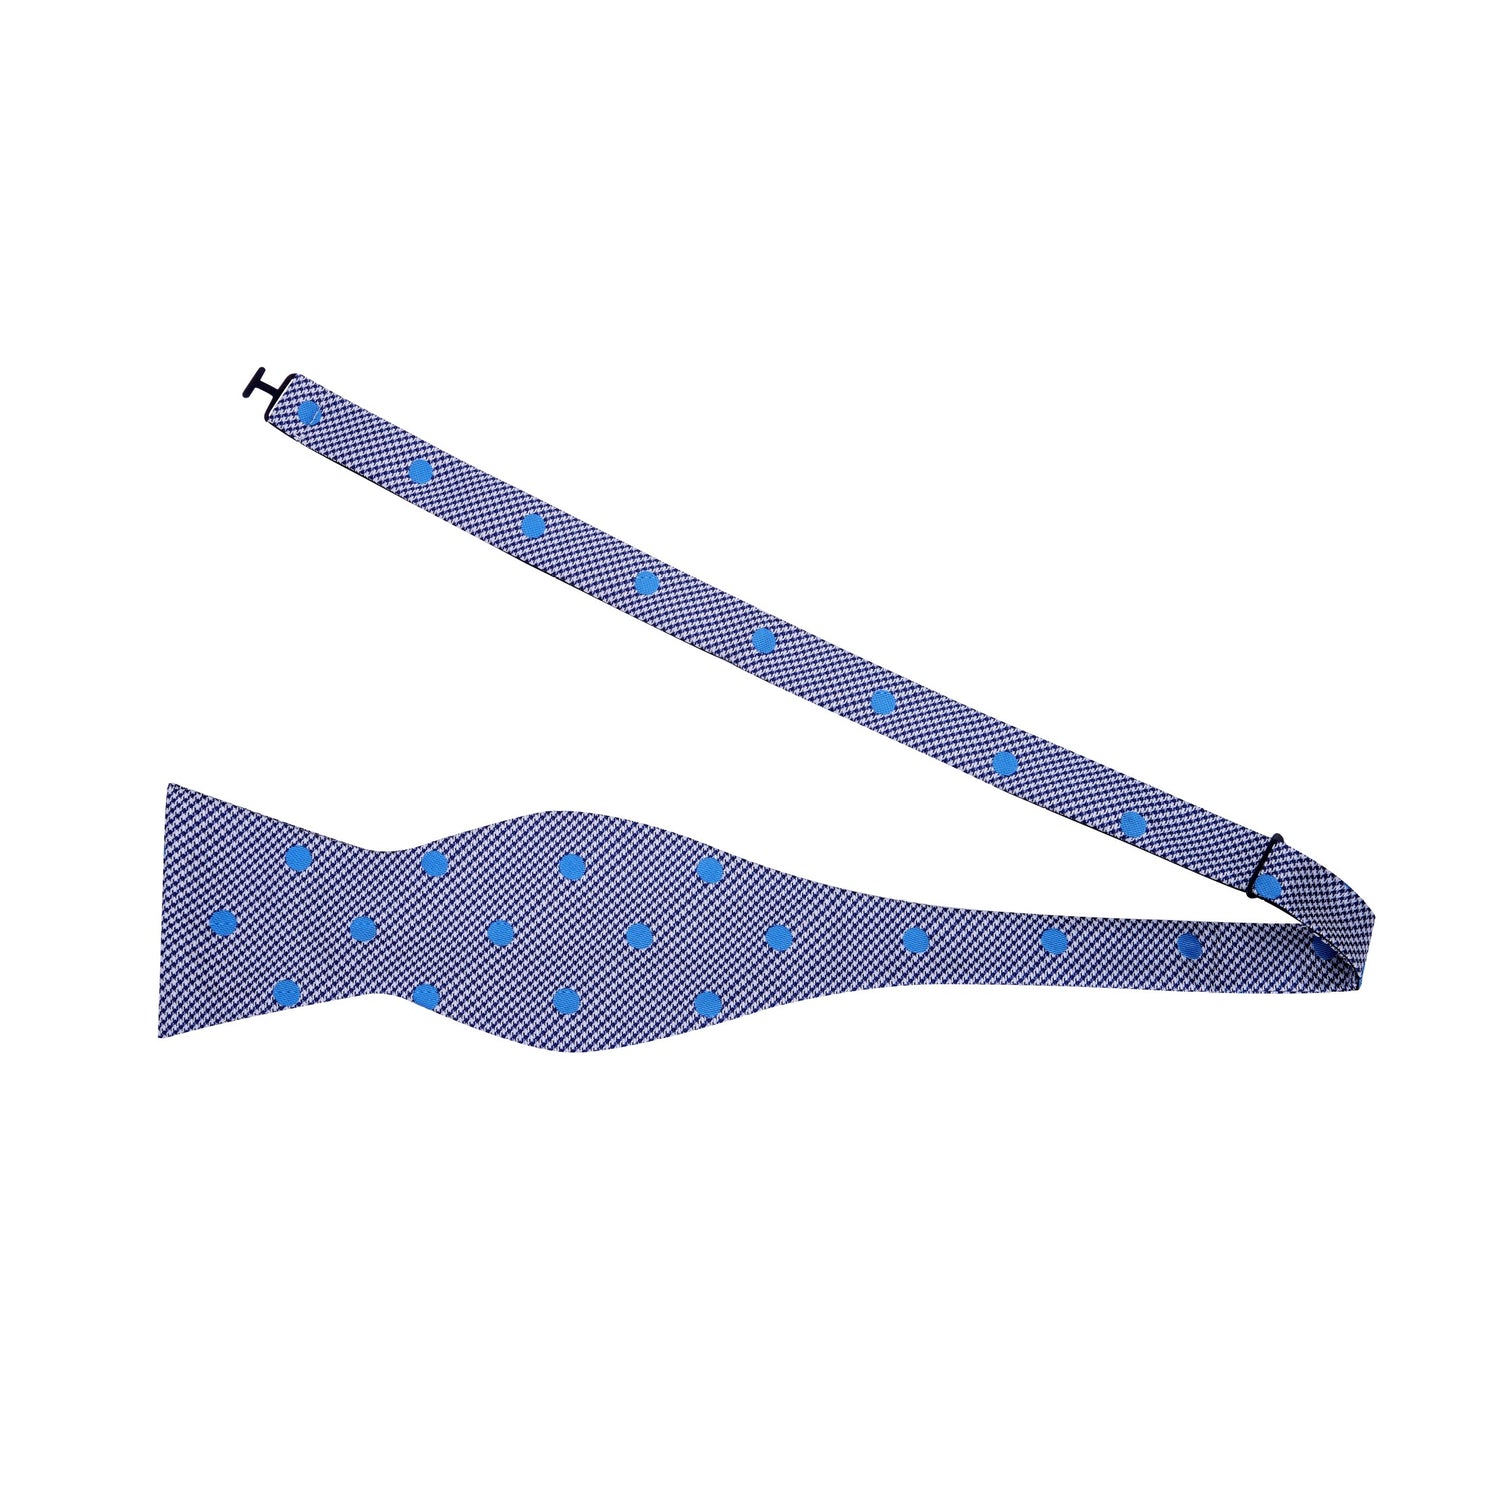 Untied: A Black, White, Blue Polka Dot Pattern Self Tie Bow Tie 